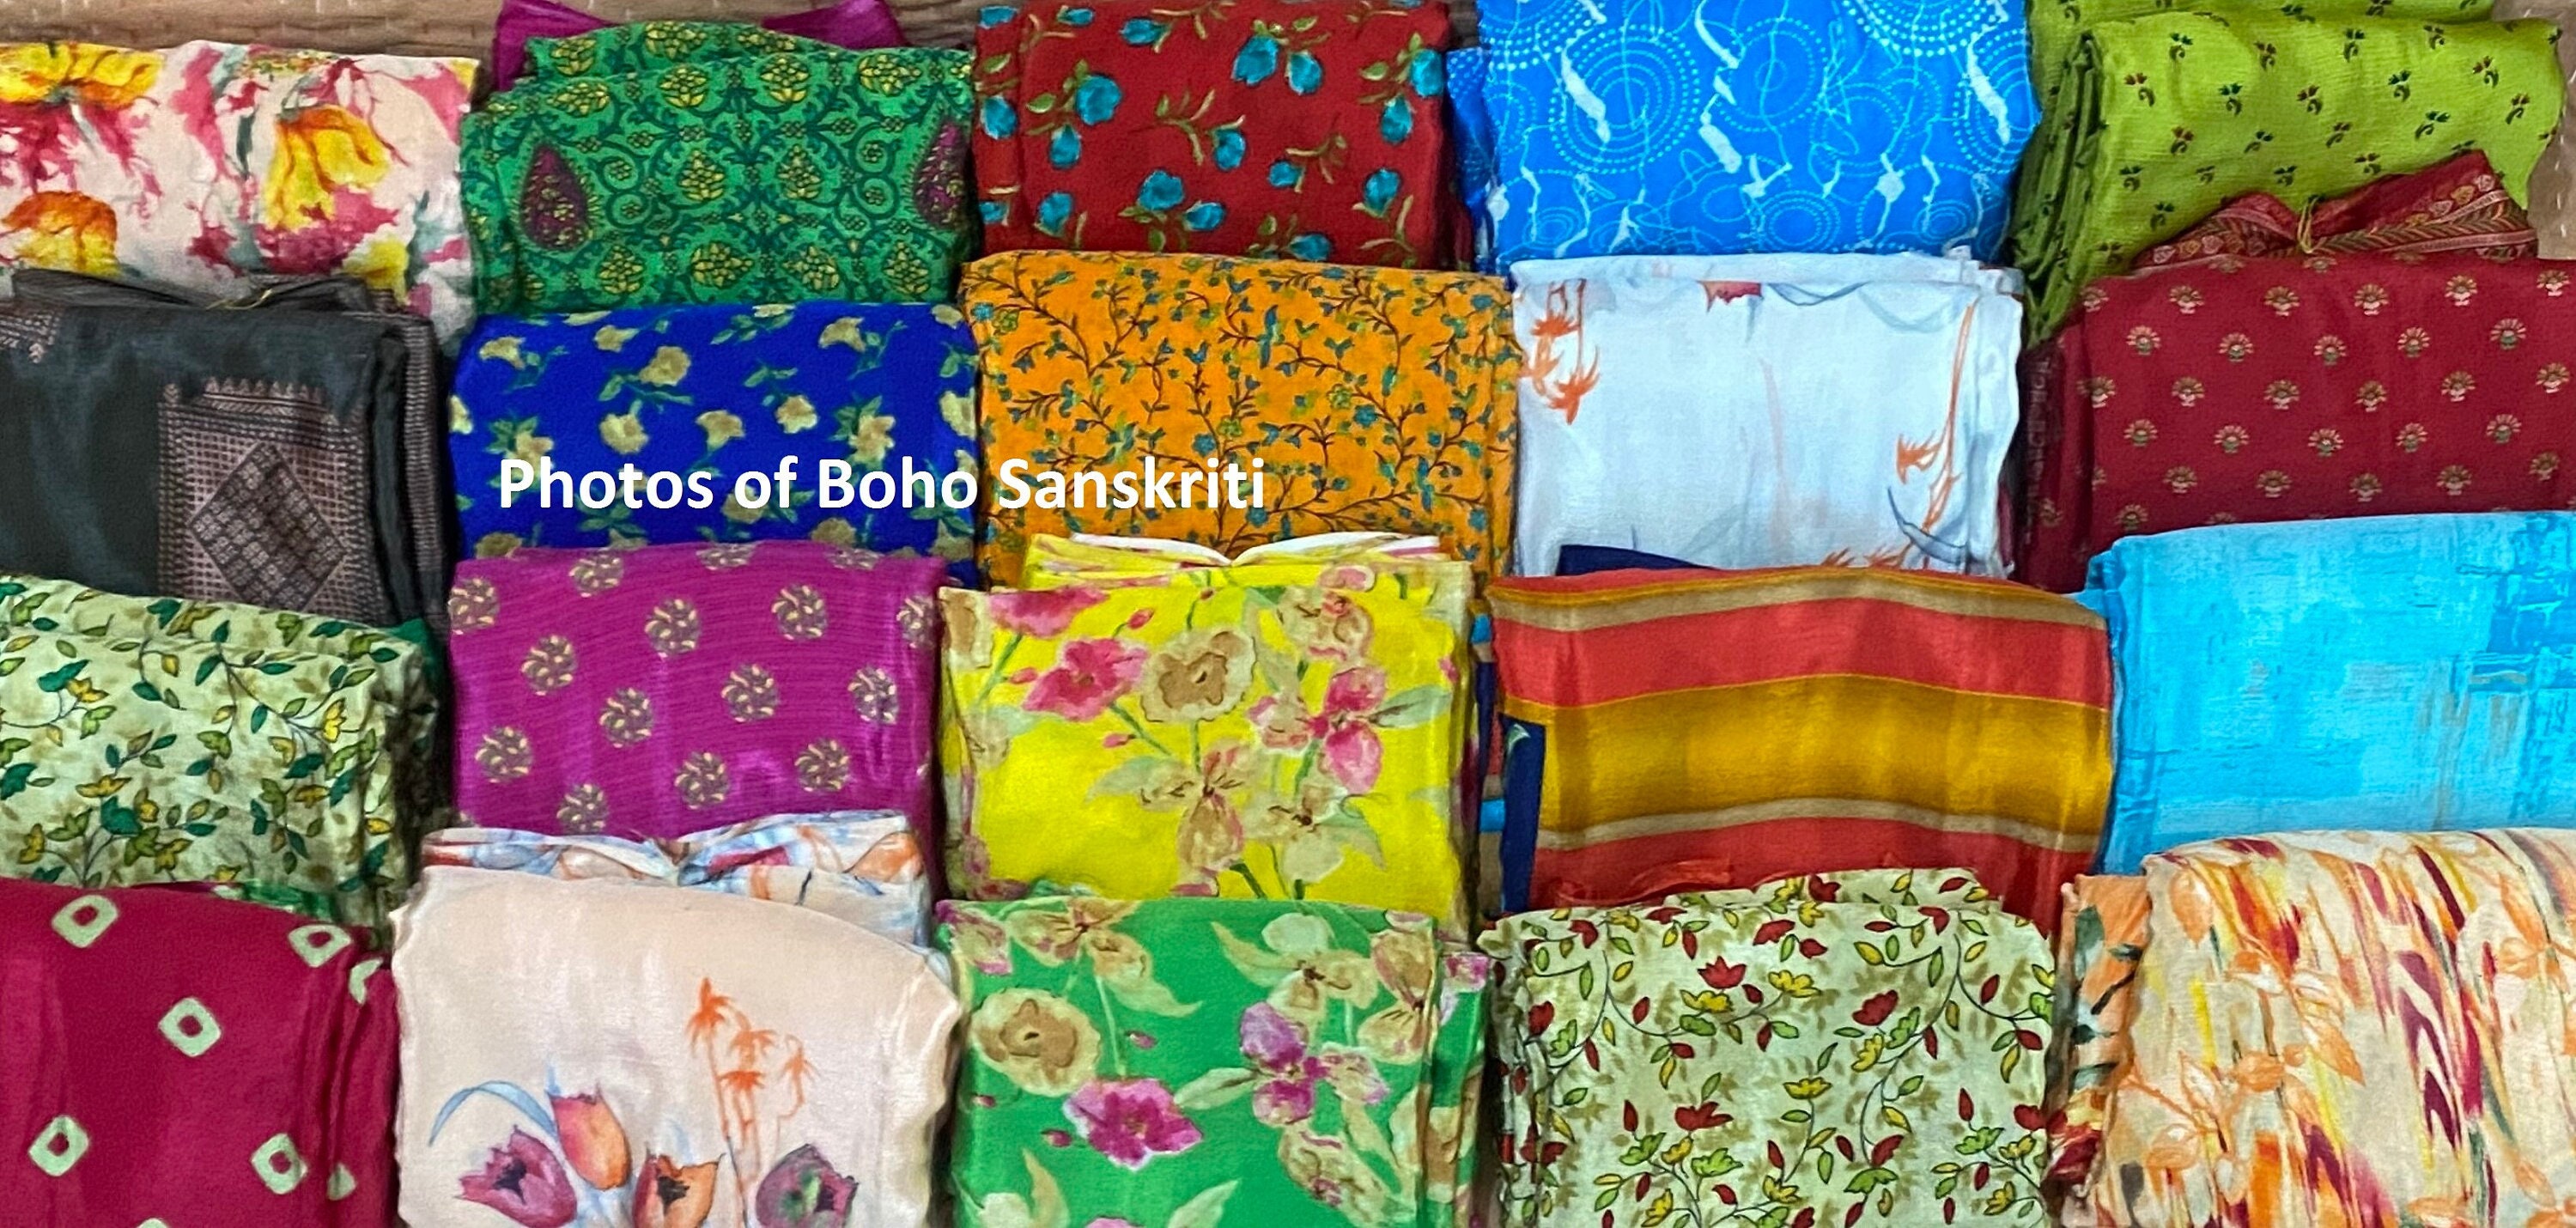 Wholesale Lots Vintage Sari Recycled Sari Art Silk Indian Sari Women Sari Vintage Sari Fabric used Sari used Saree Sari Silk Fabric Fabric